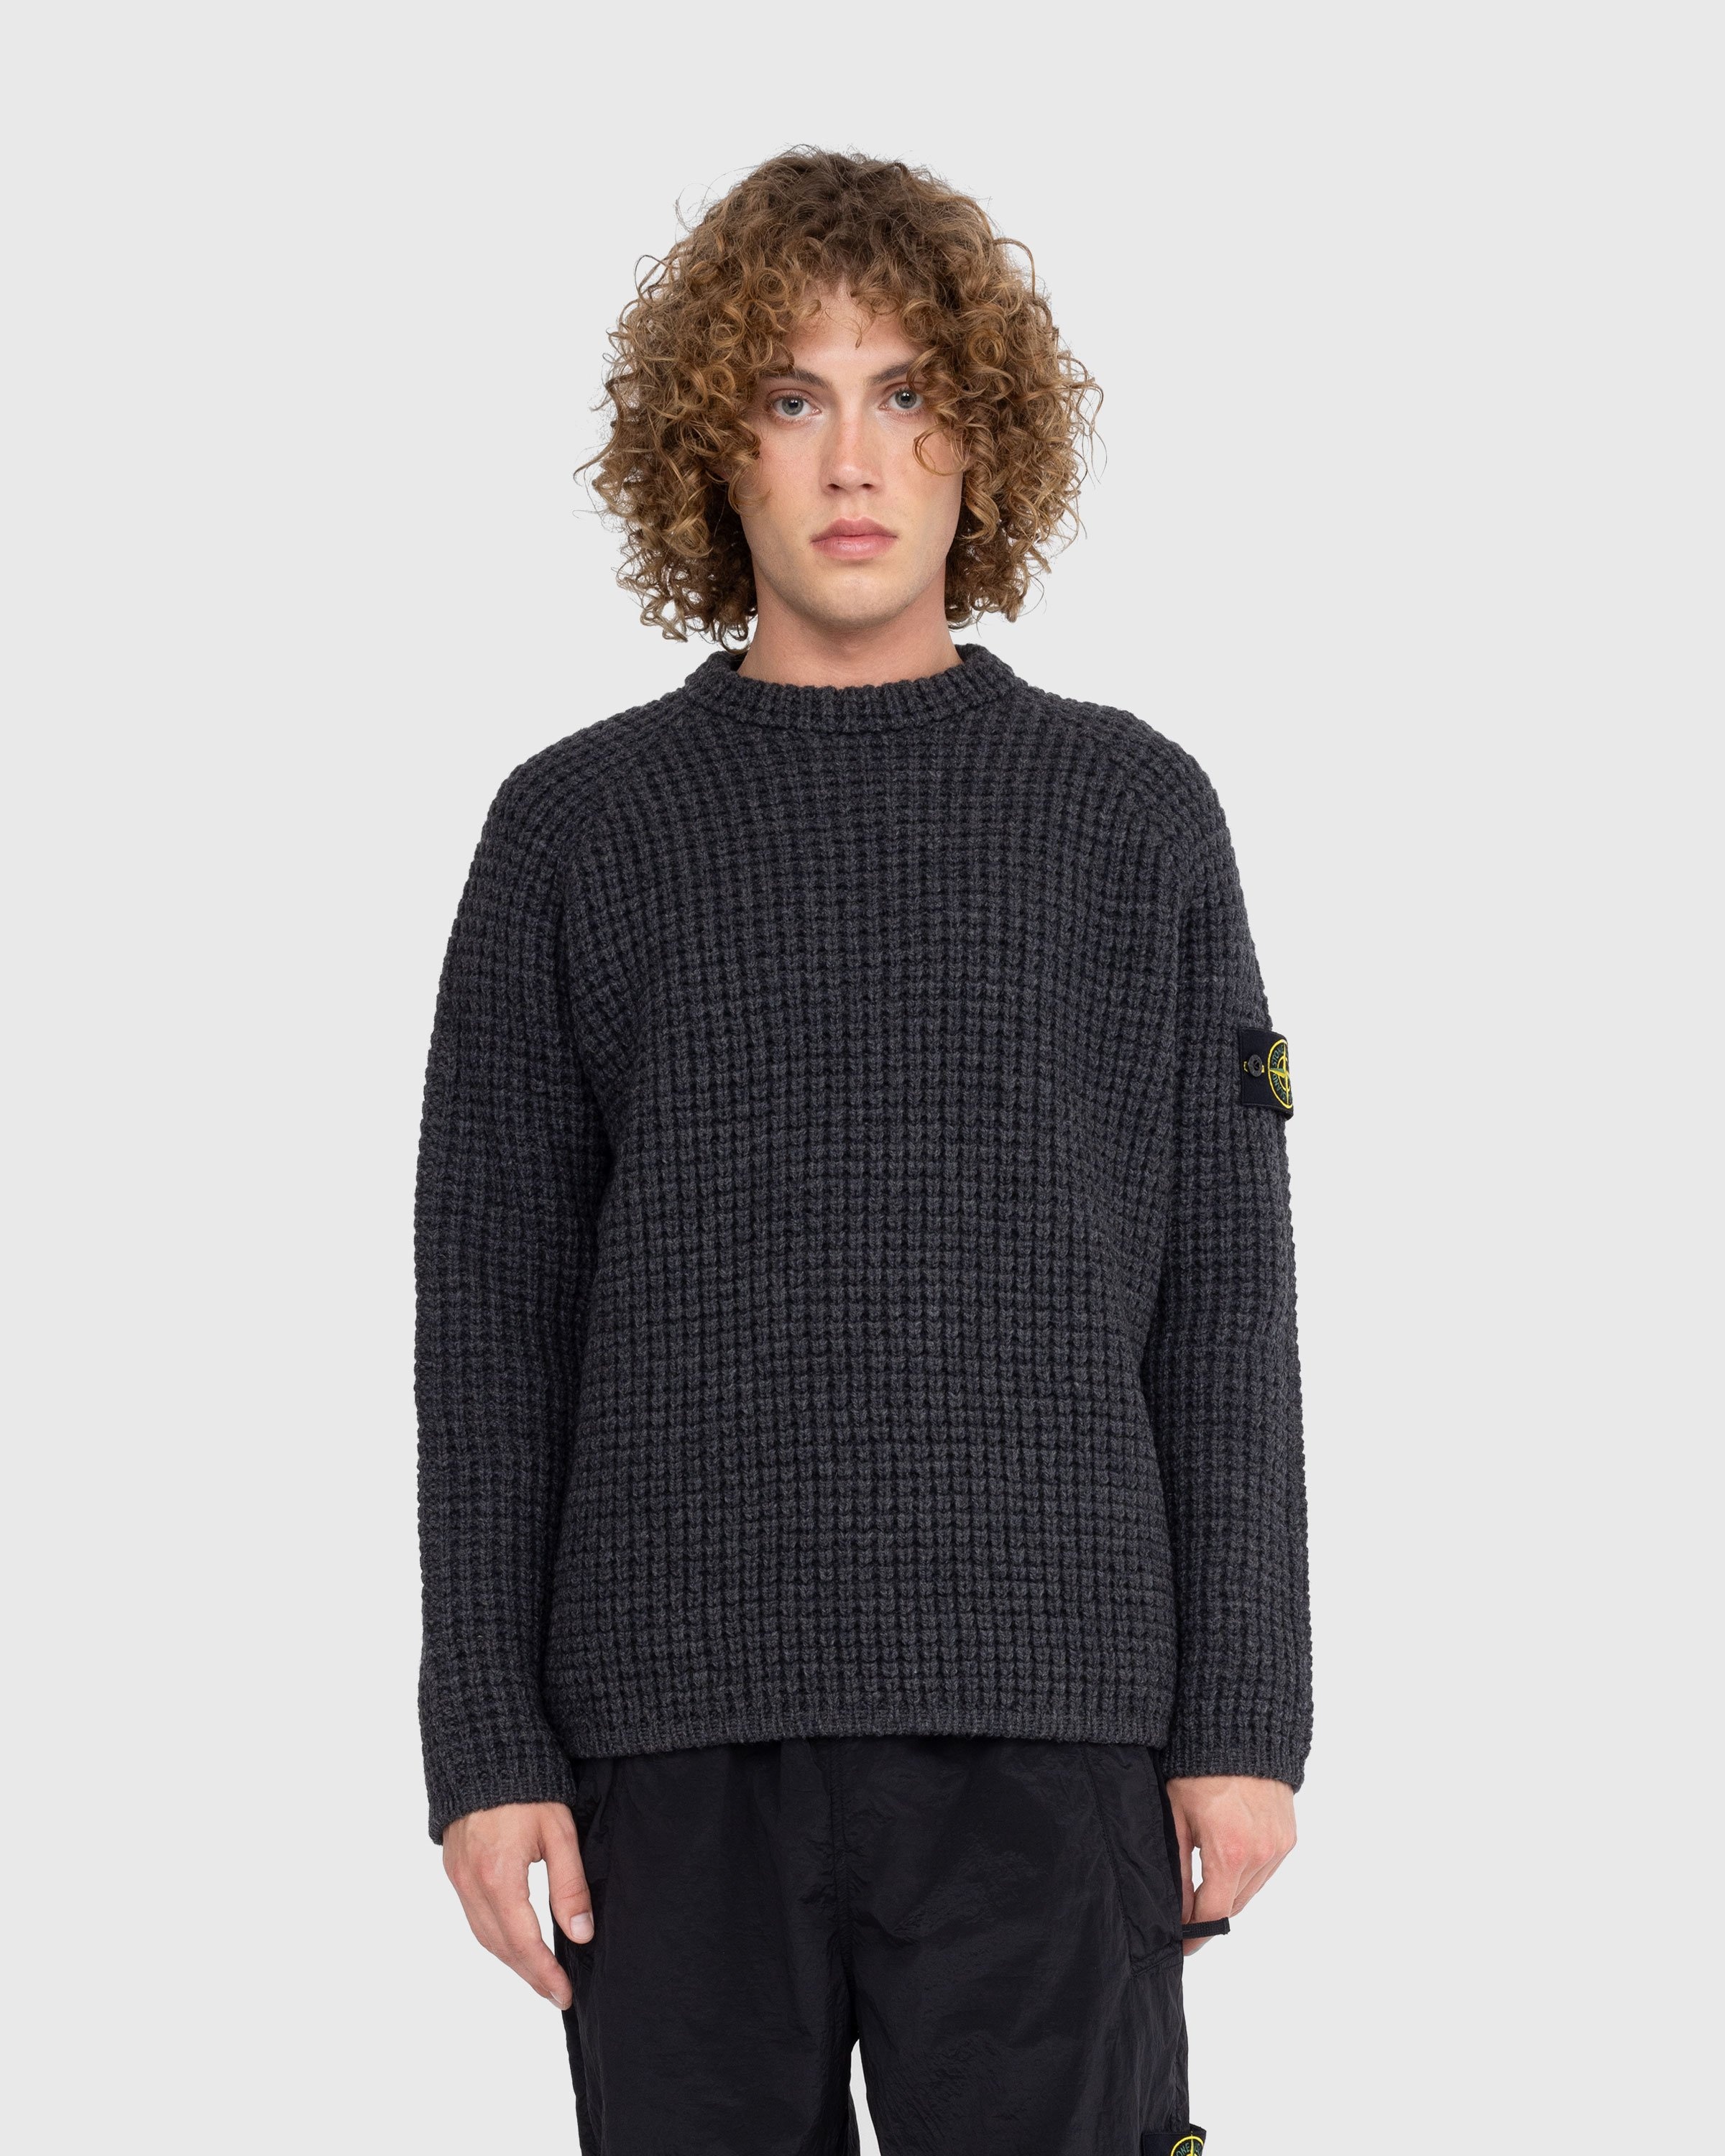 Stone Island – Waffle Knit Sweater Melange Charcoal - Knitwear - Grey - Image 2